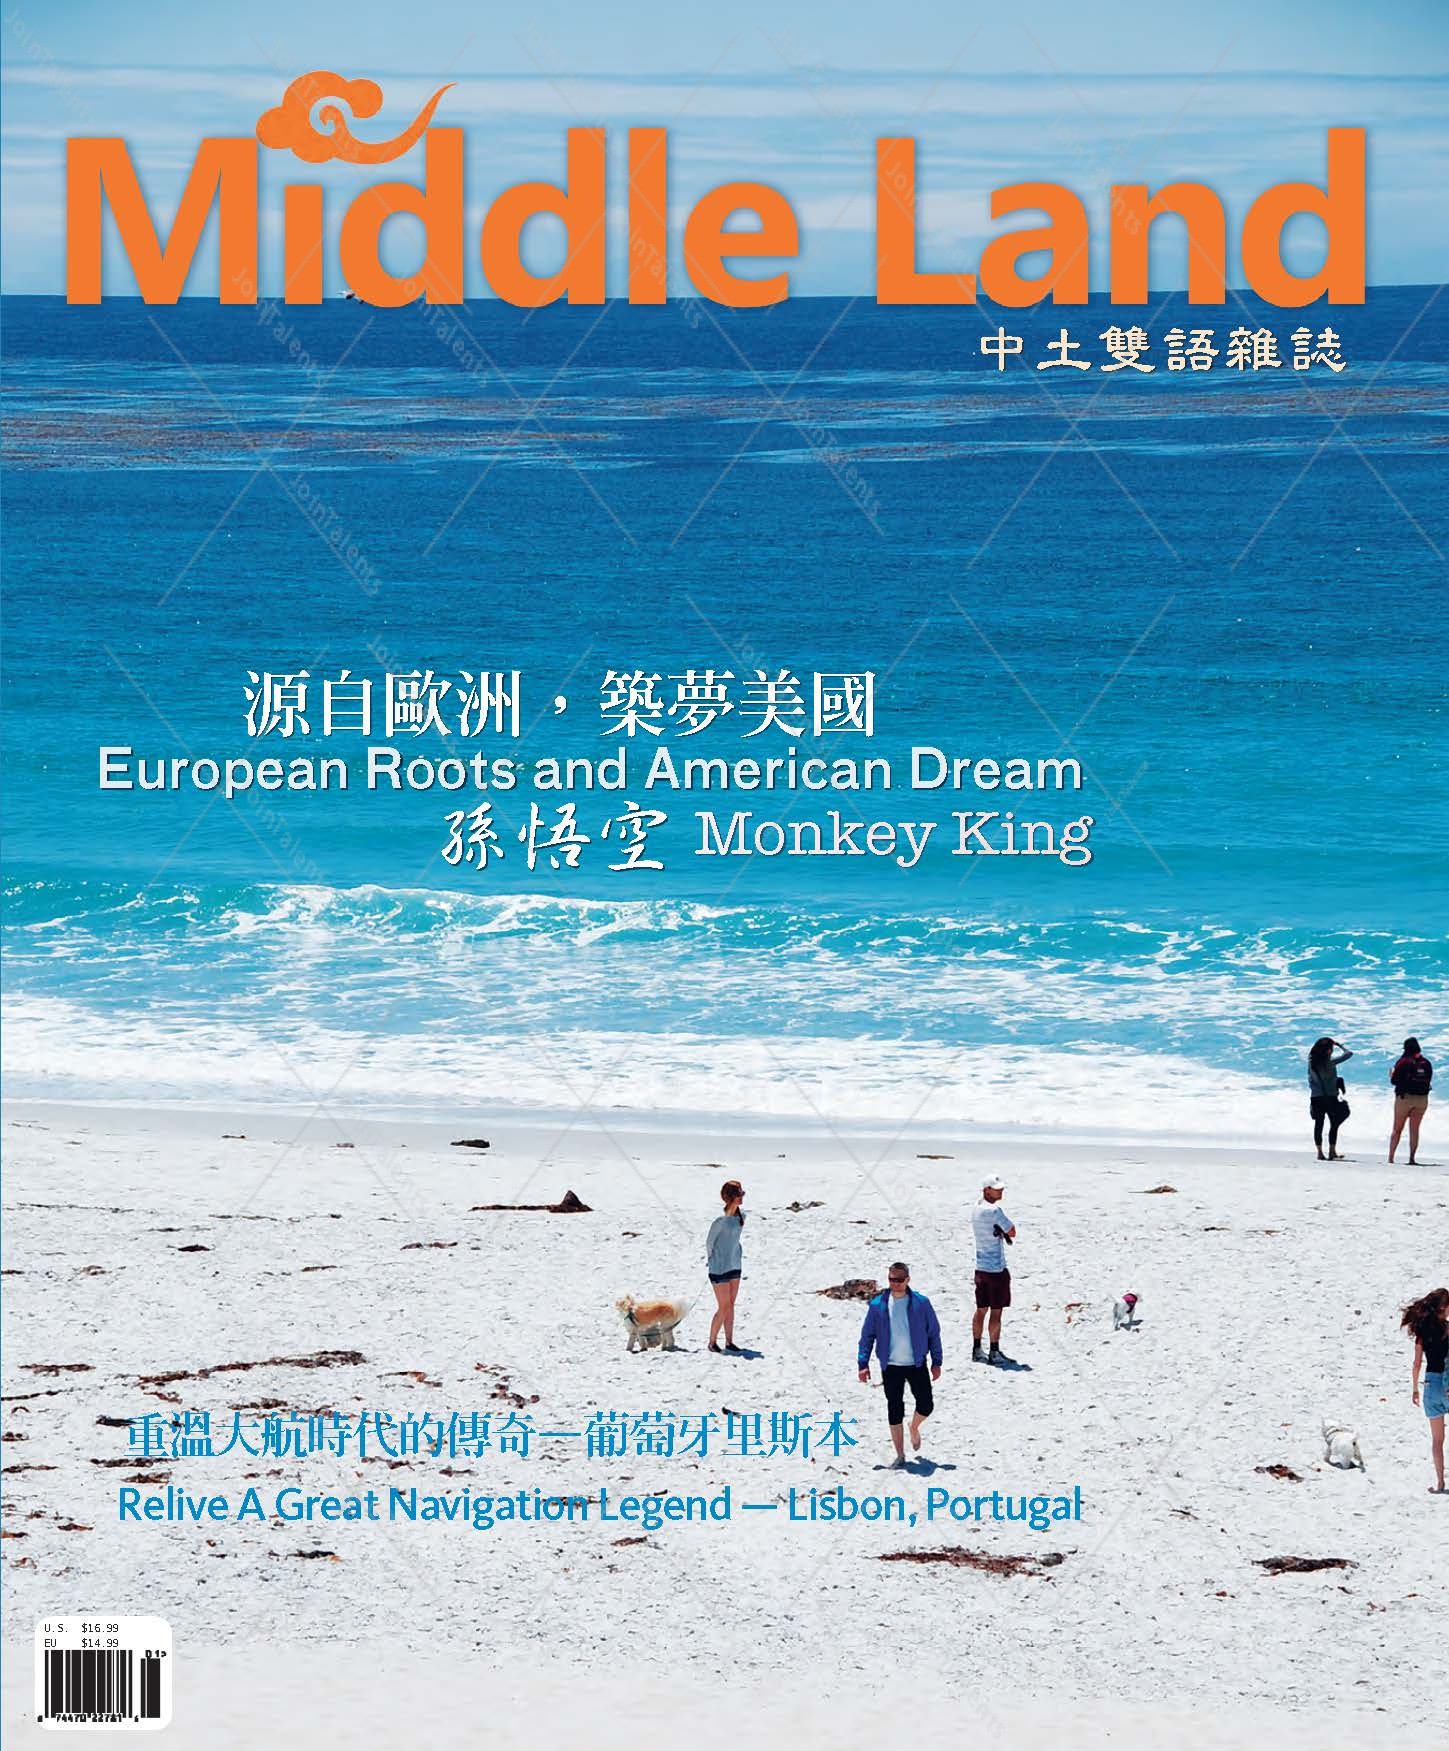 The Middle Land Magazine - Travel Destinations